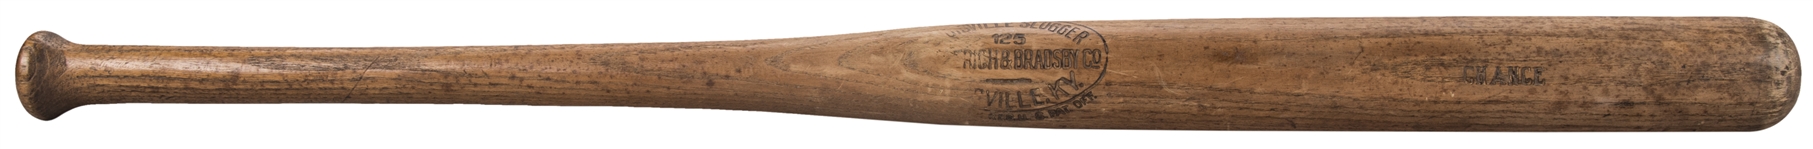 1916-1922 Frank Chance Game Used Hillerich & Bradsby Pro Model Bat (PSA/DNA GU 8.5)